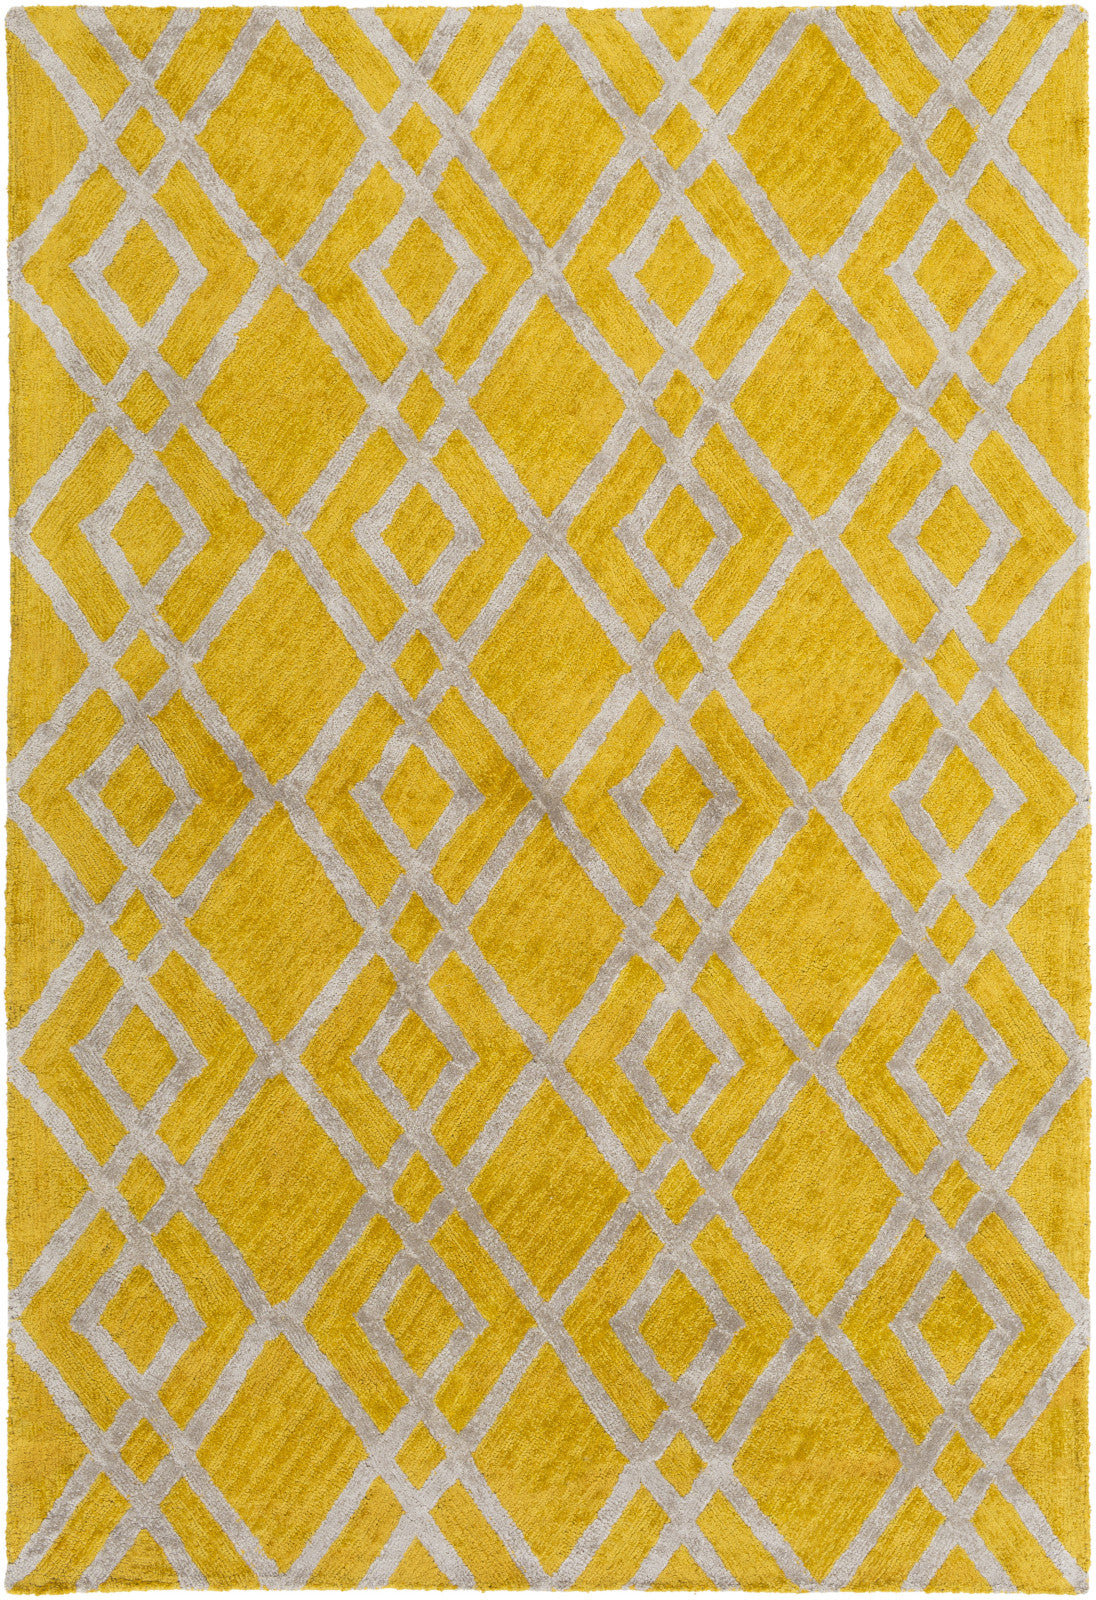 Artistic Weavers Silk Valley Lila Bright Yellow/Light Gray Area Rug main image